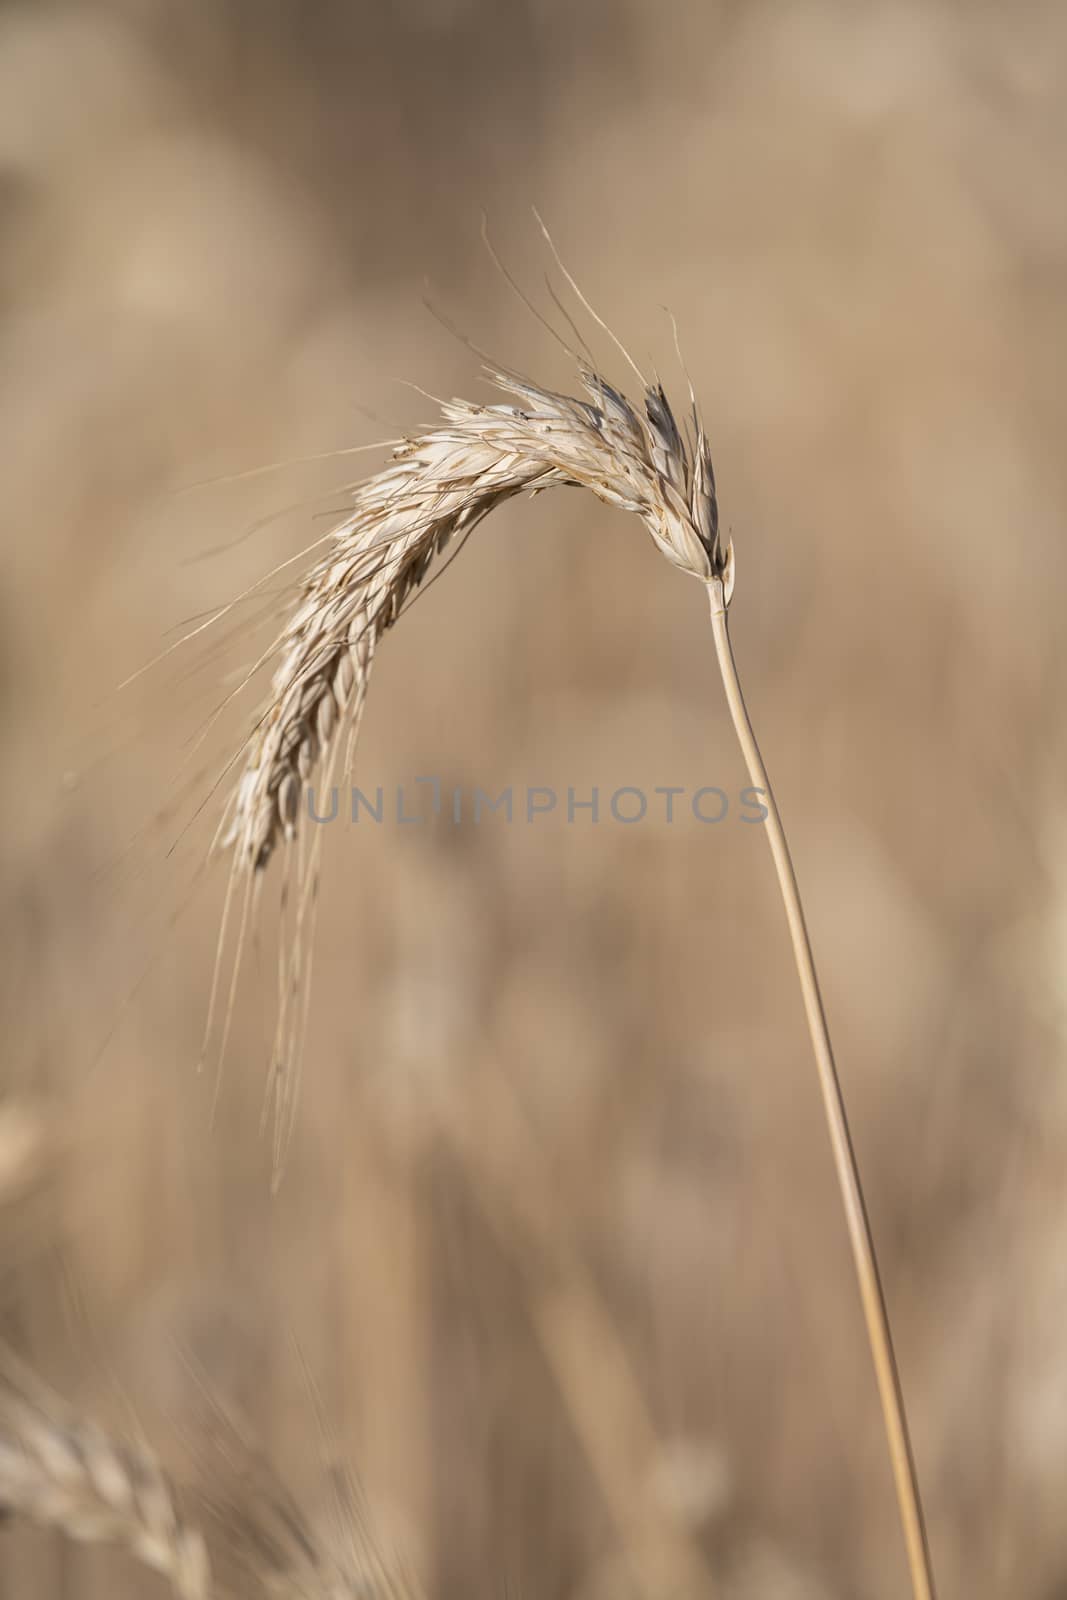 Detail of a single stalk corn
 by Tofotografie